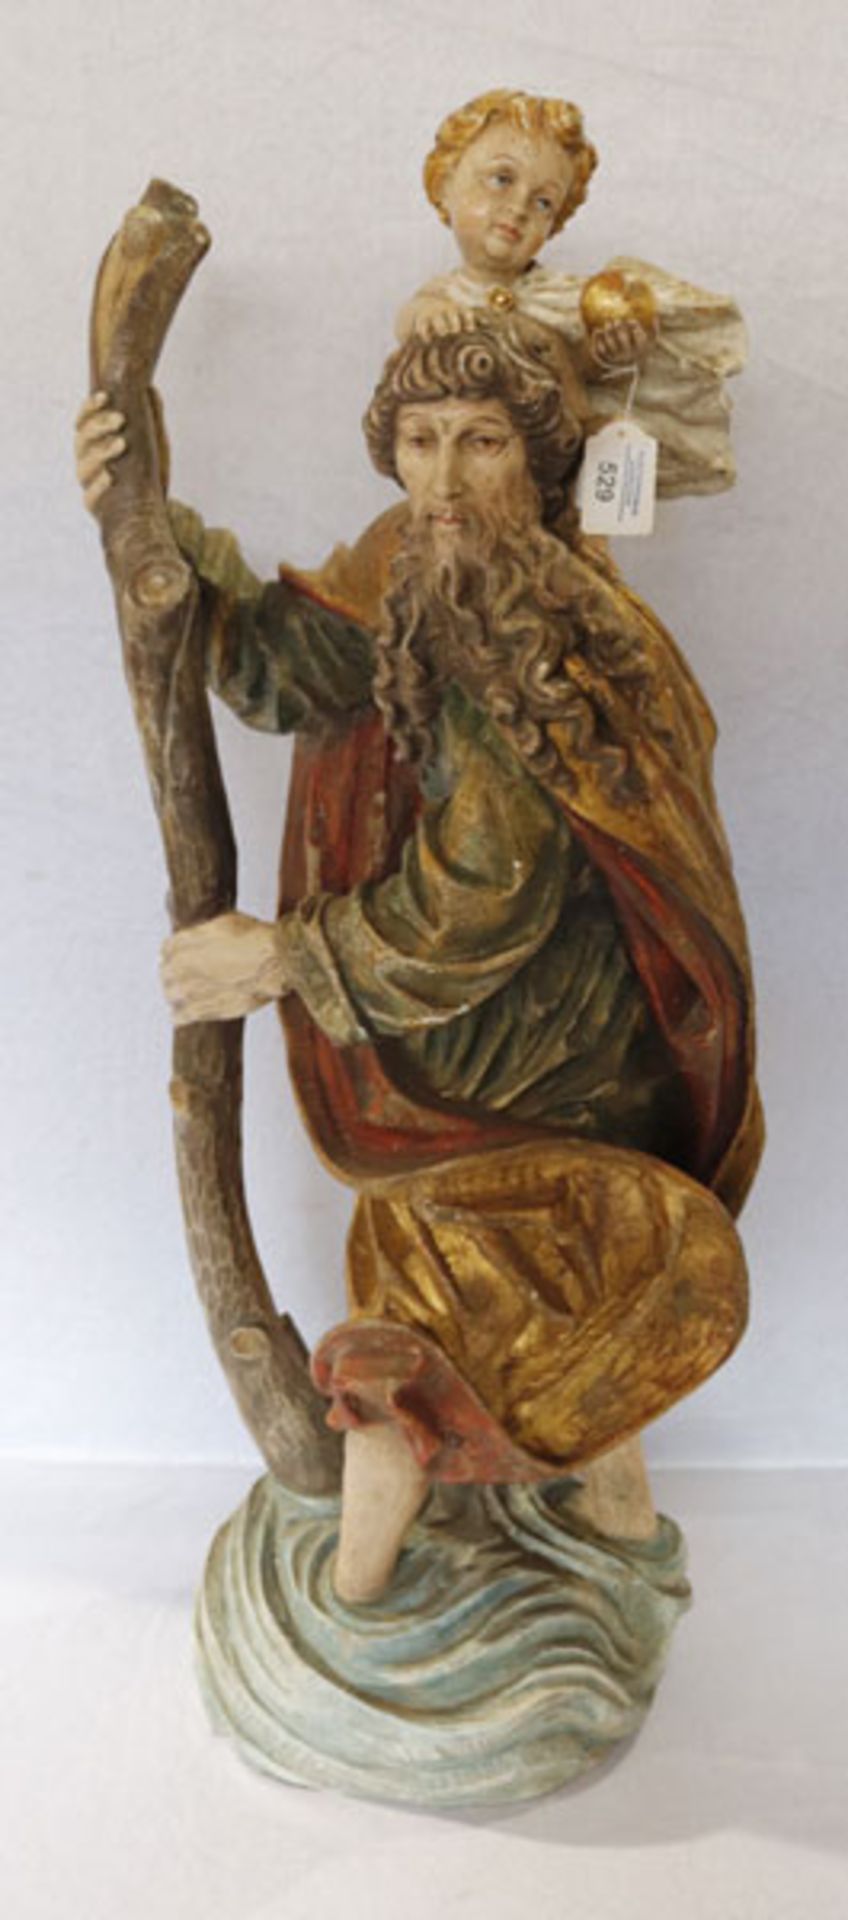 Holz Figurenskulptur 'Heiliger Christophorus', farbig gefaßt, Fassung teils beschädigt, H 90 cm, B